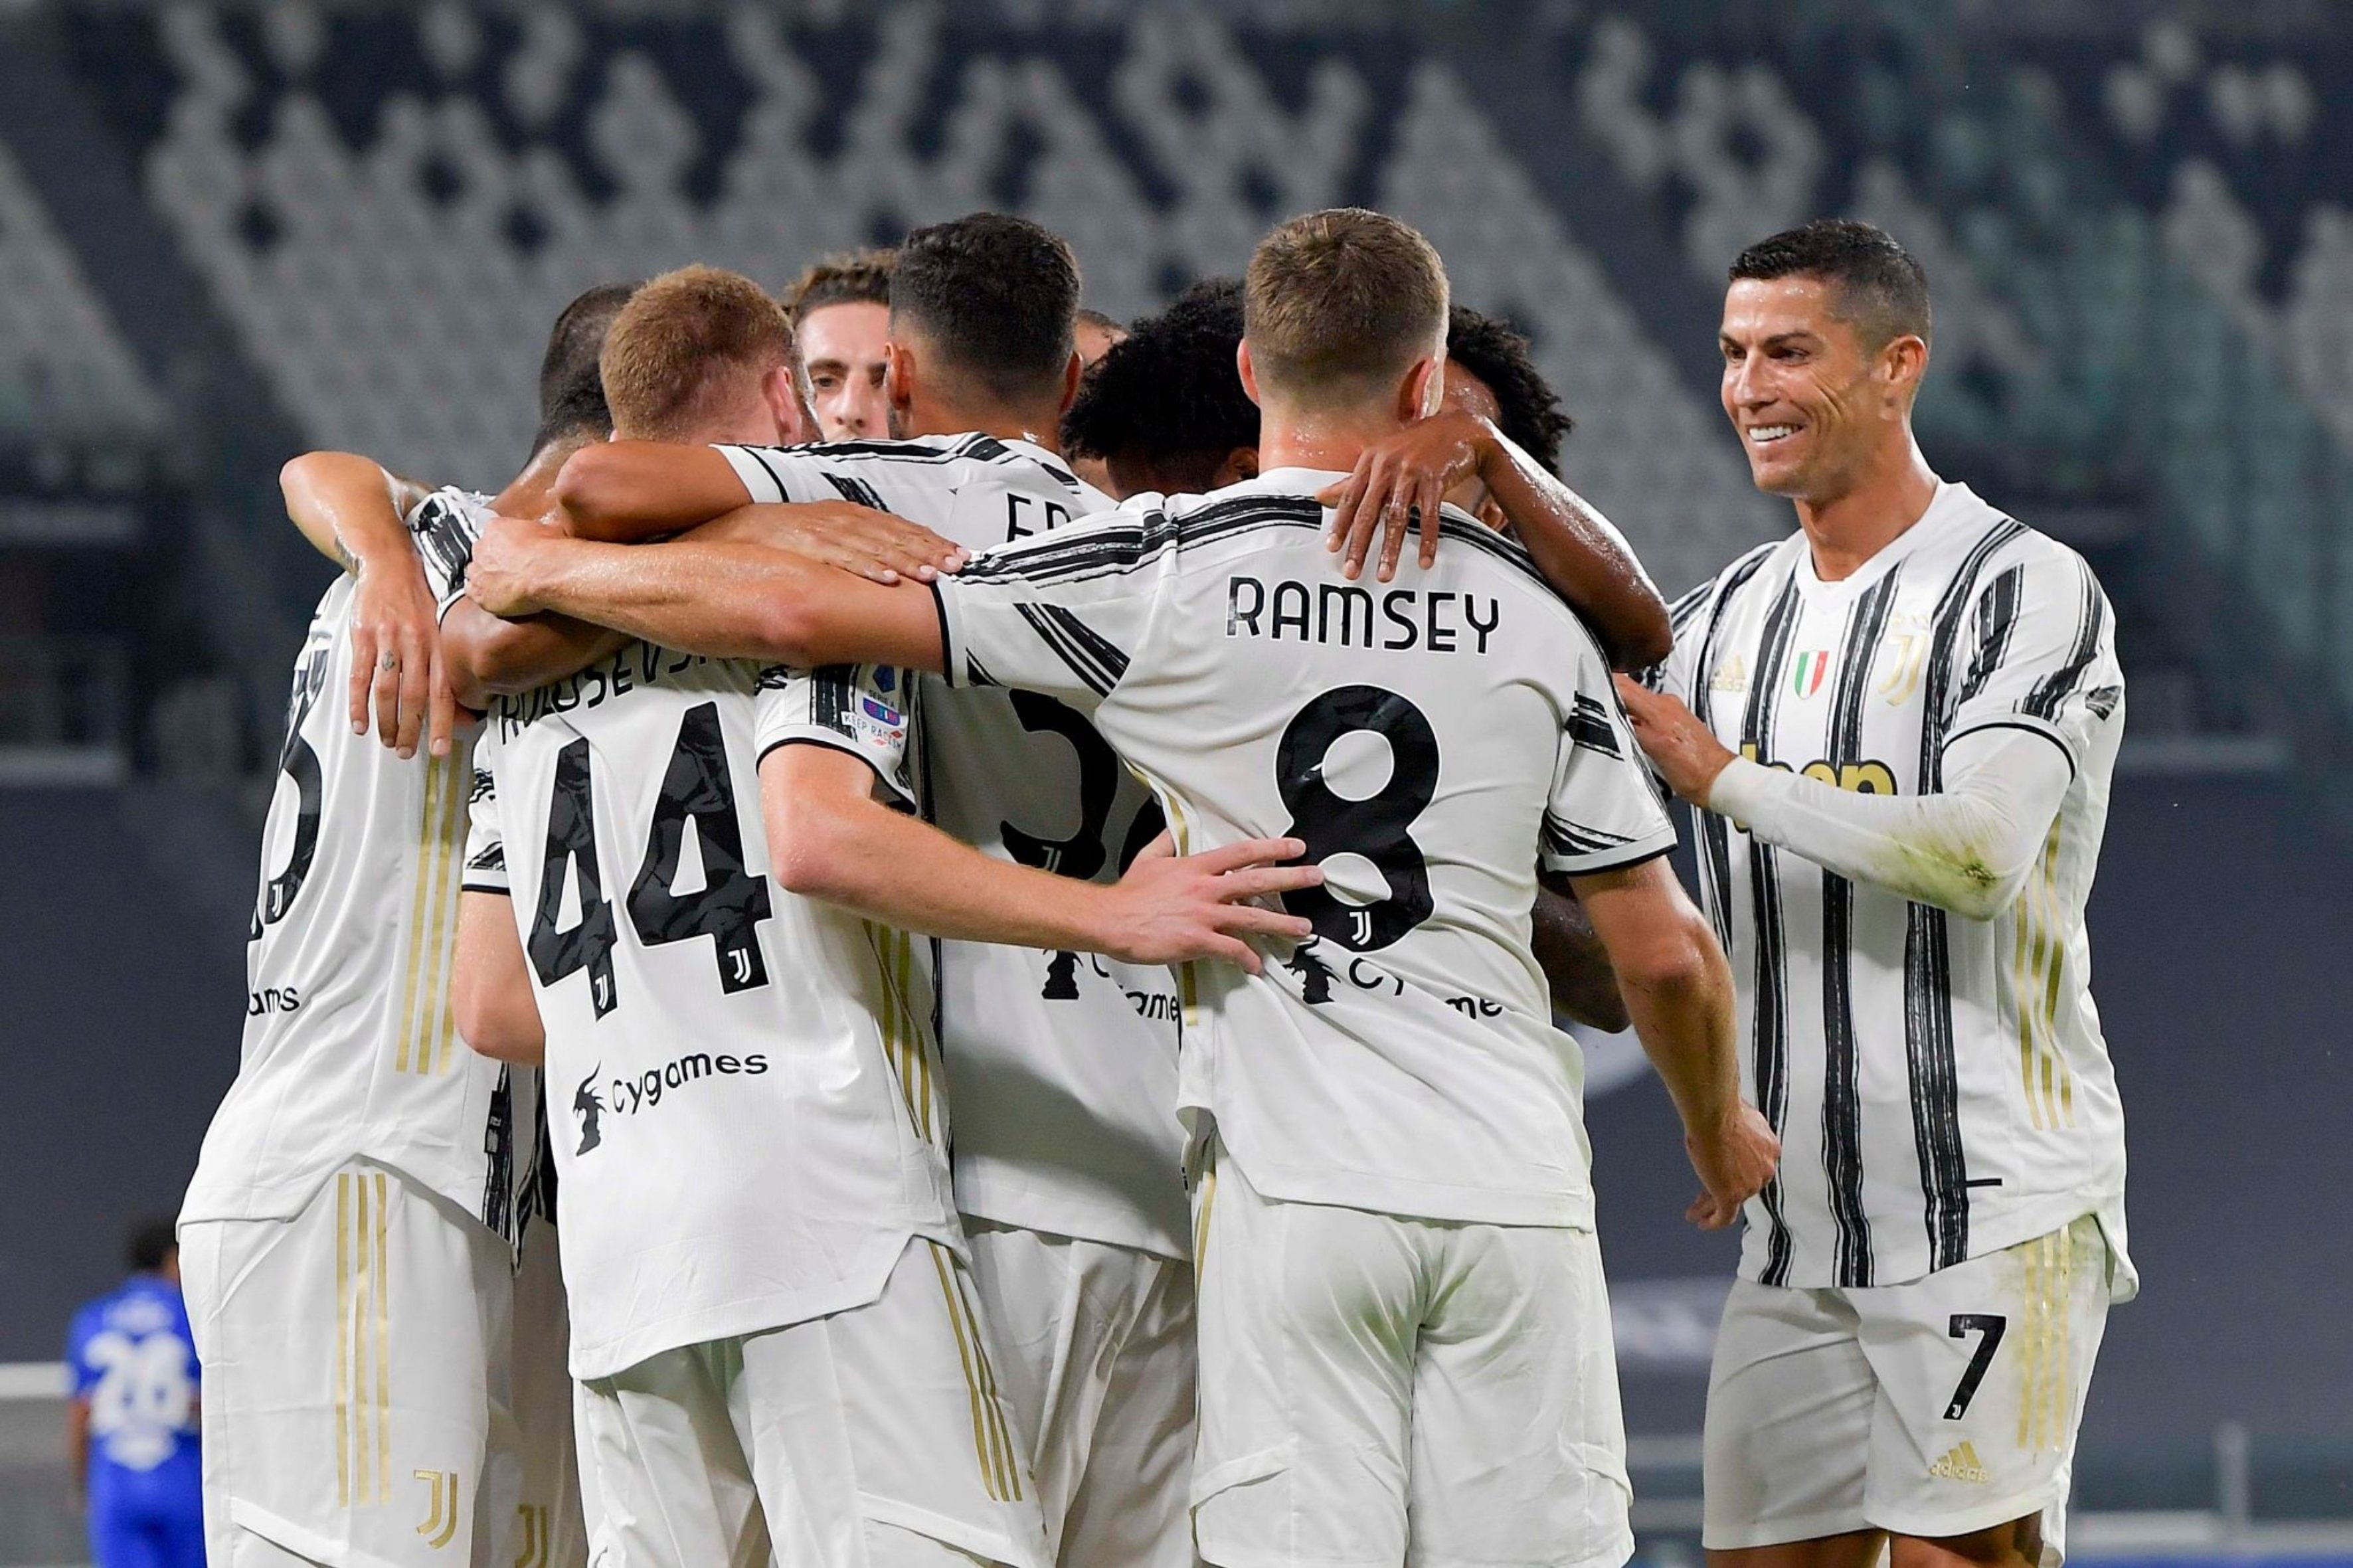 یوونتوس - سری آ - Serie A - Juventus - گلزنی مقابل سمپدوریا - اولین گل برای یوونتوس